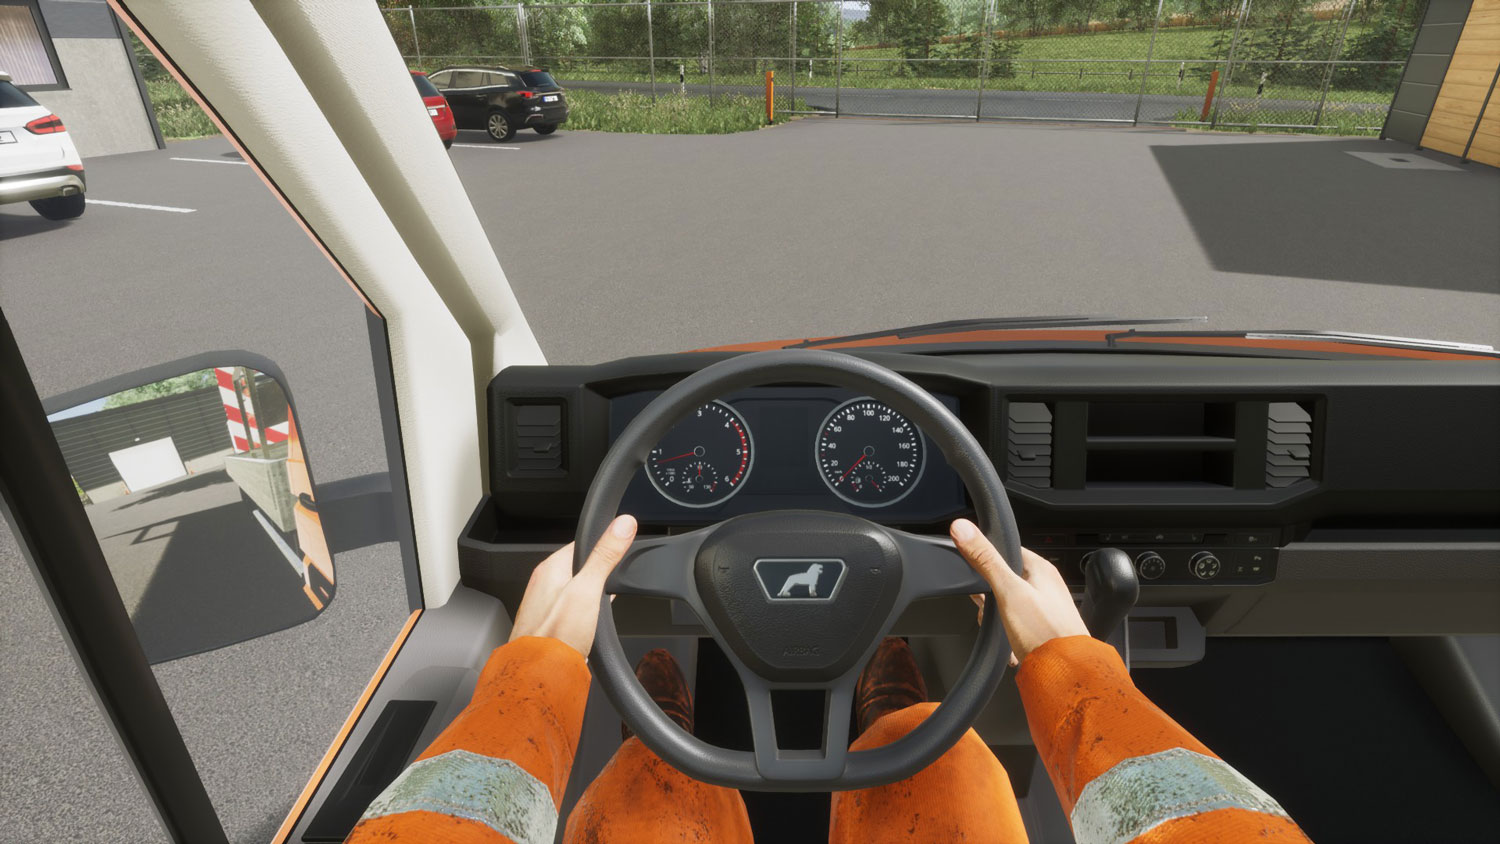 Road Maintenance Simulator PS4 | Aerosoft US Shop